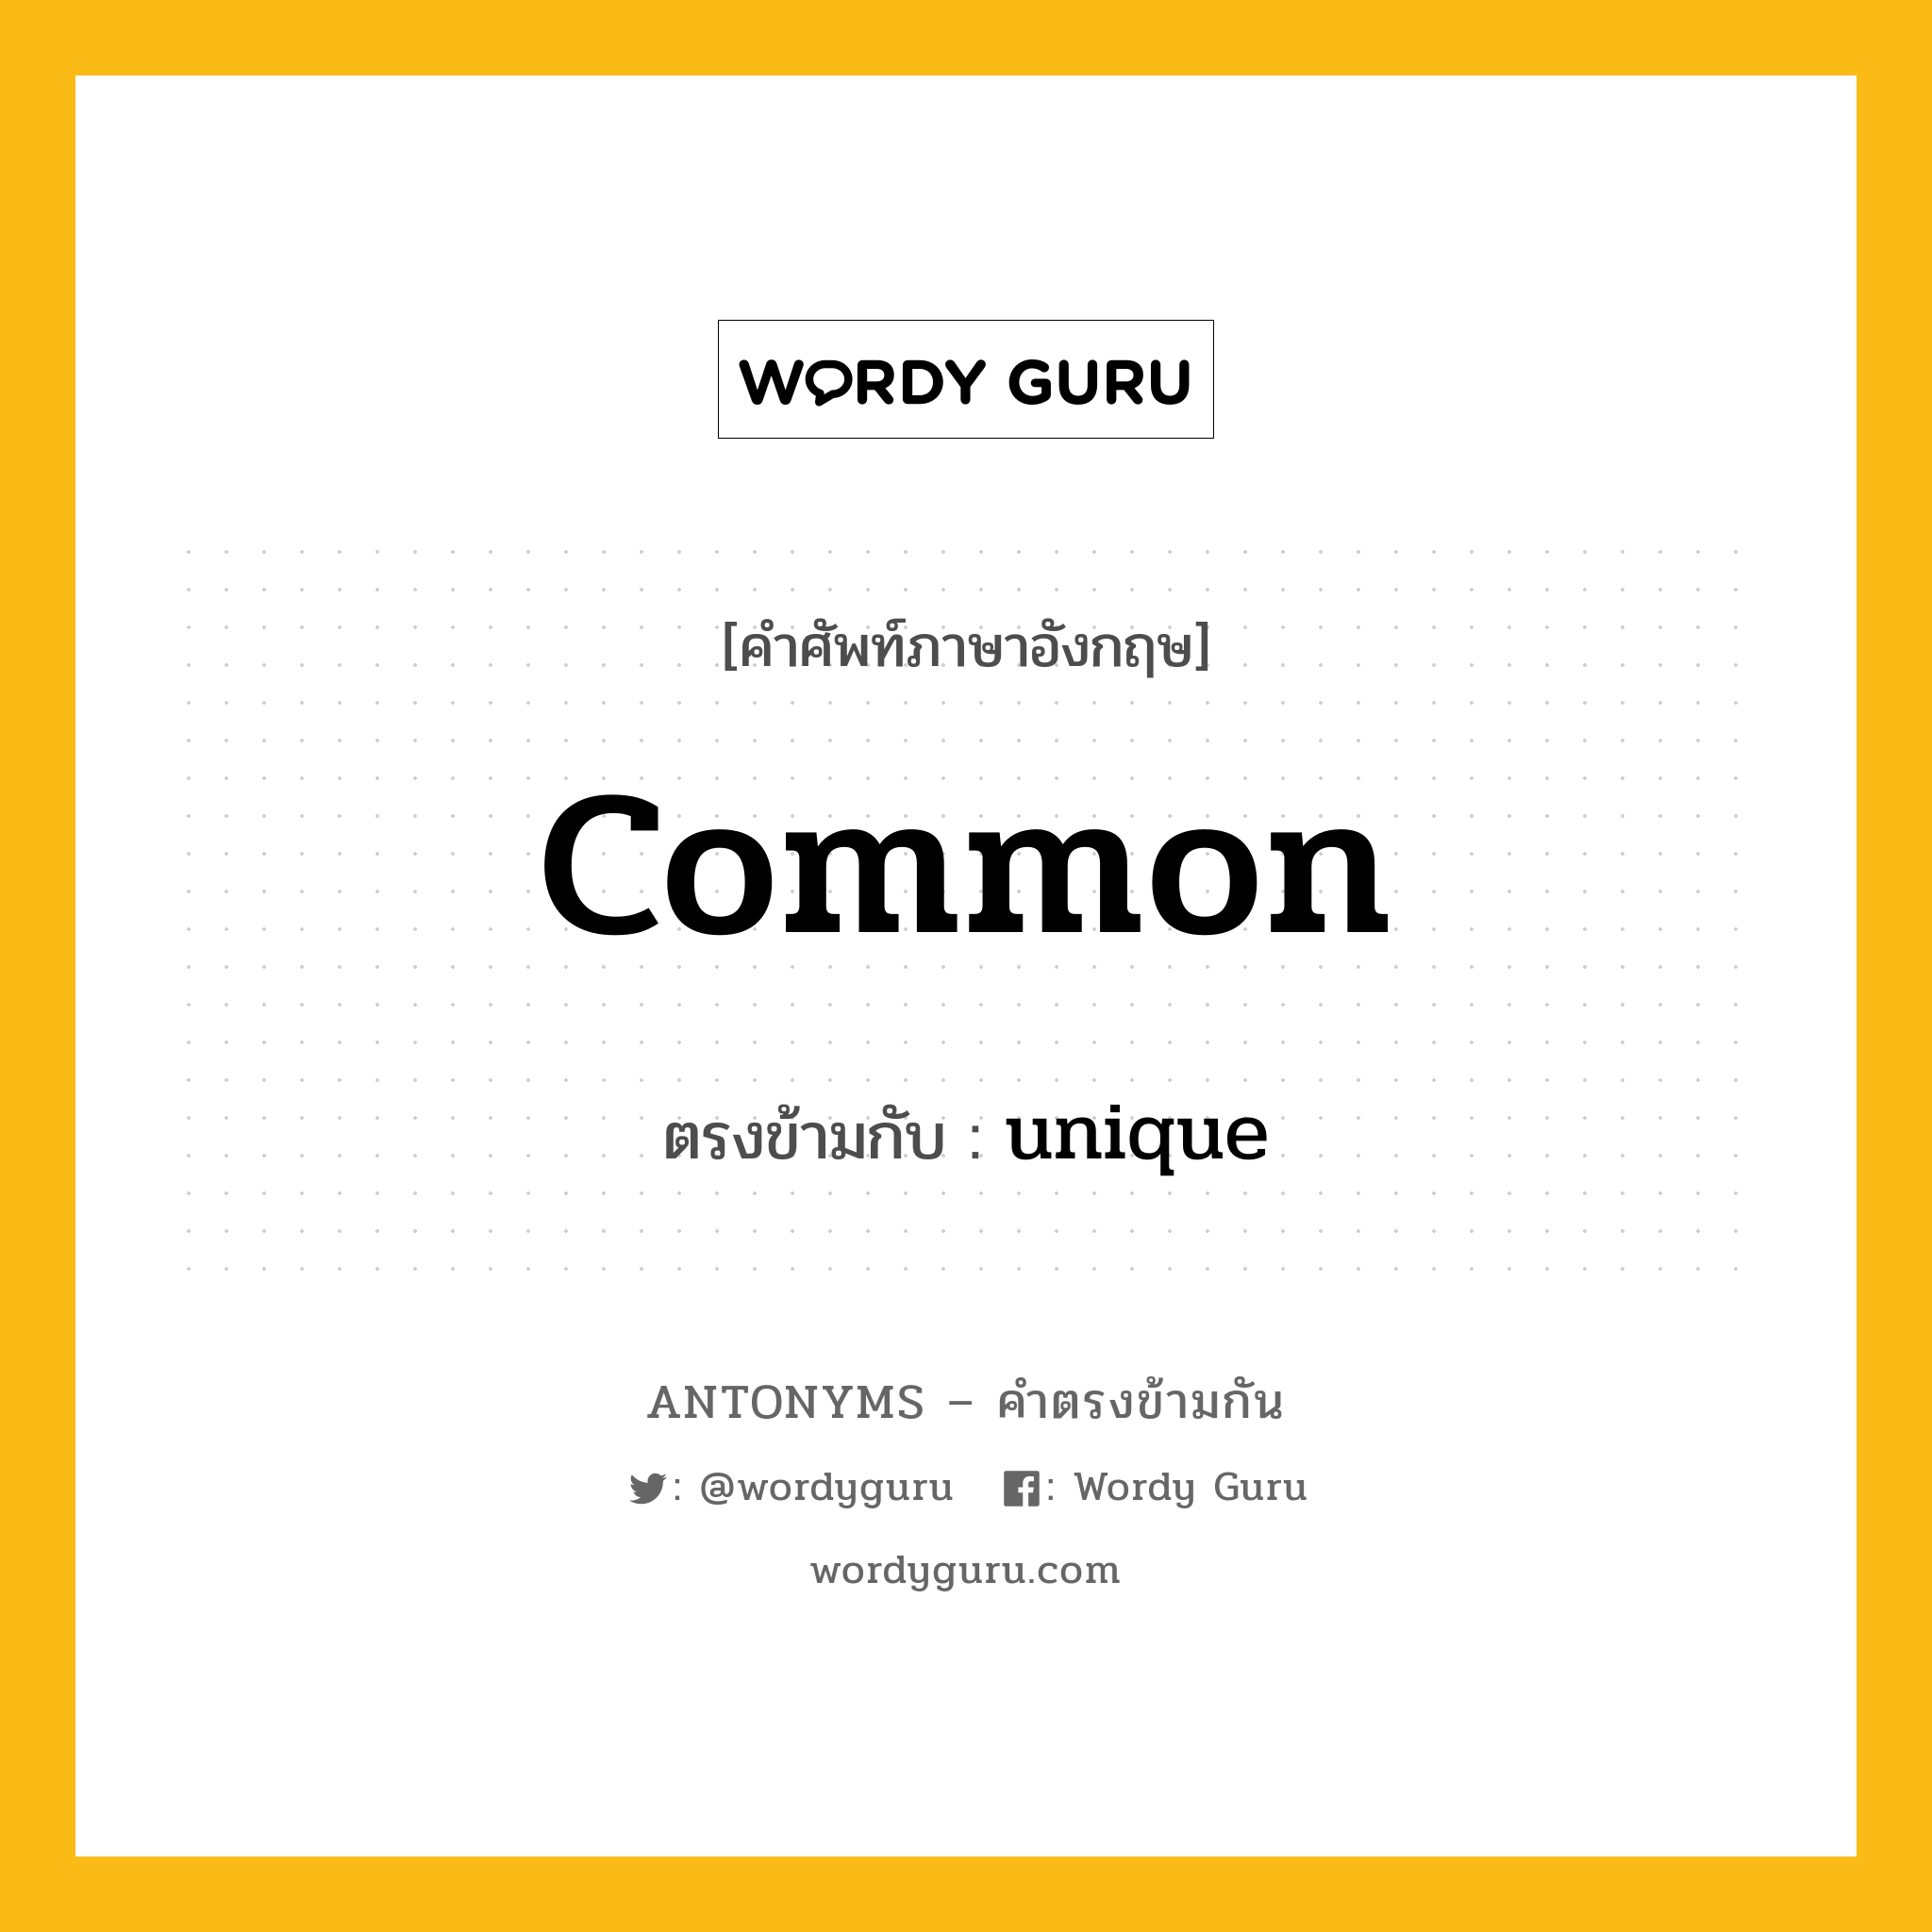 common เป็นคำตรงข้ามกับคำไหนบ้าง?, คำศัพท์ภาษาอังกฤษ common ตรงข้ามกับ unique หมวด unique